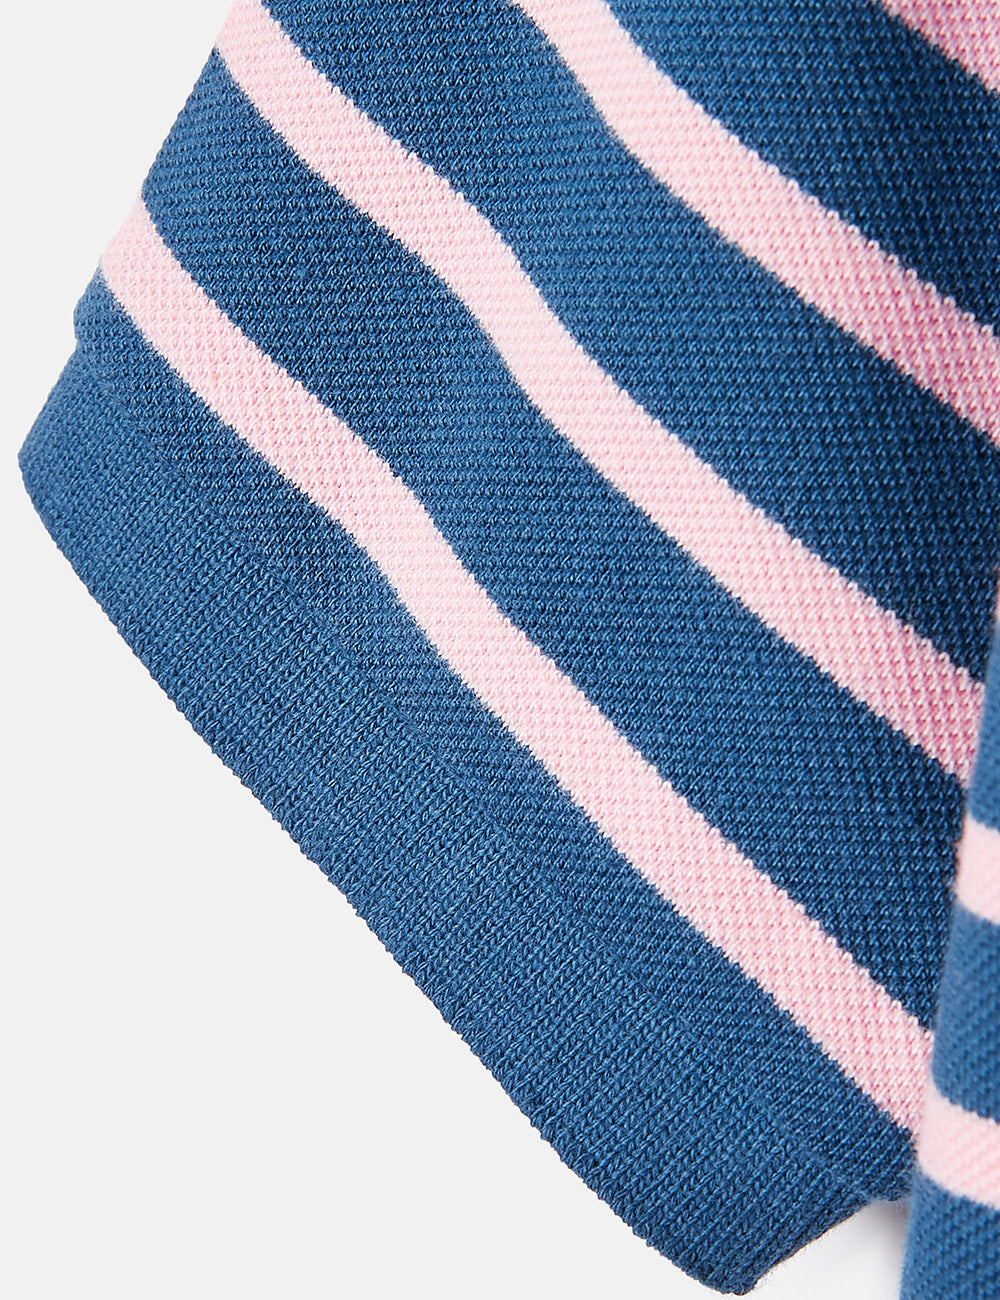 Joules Filbert Striped Polo Shirt - Ink Blue/Lilac Stripe